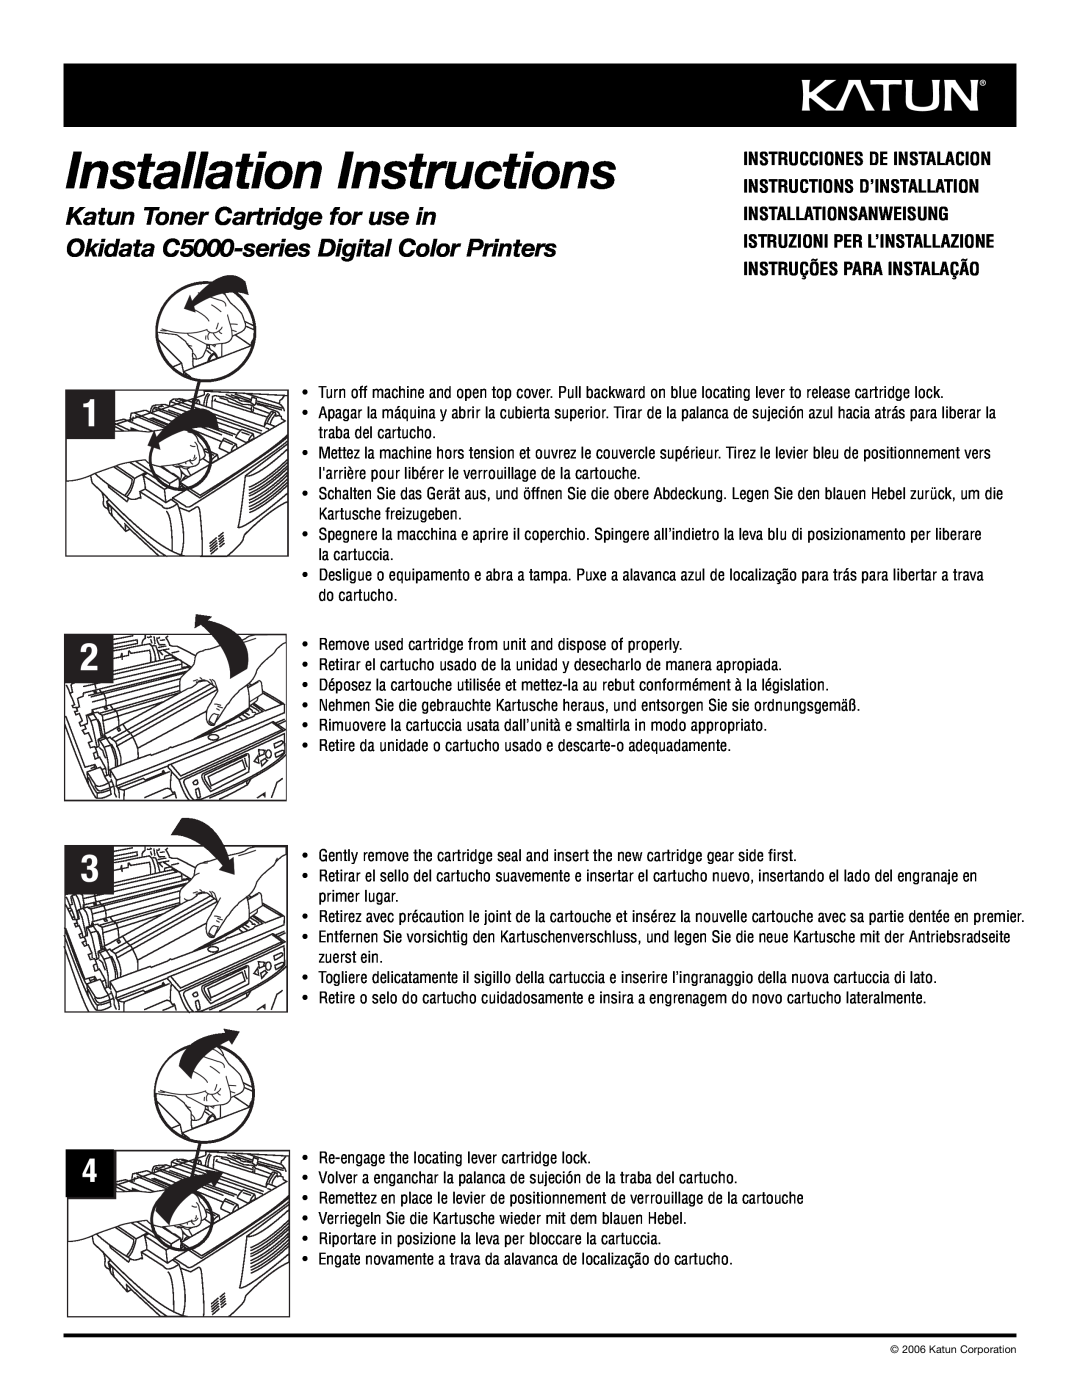 Oki C5000-series installation instructions Installation Instructions, Katun Toner Cartridge for use in 